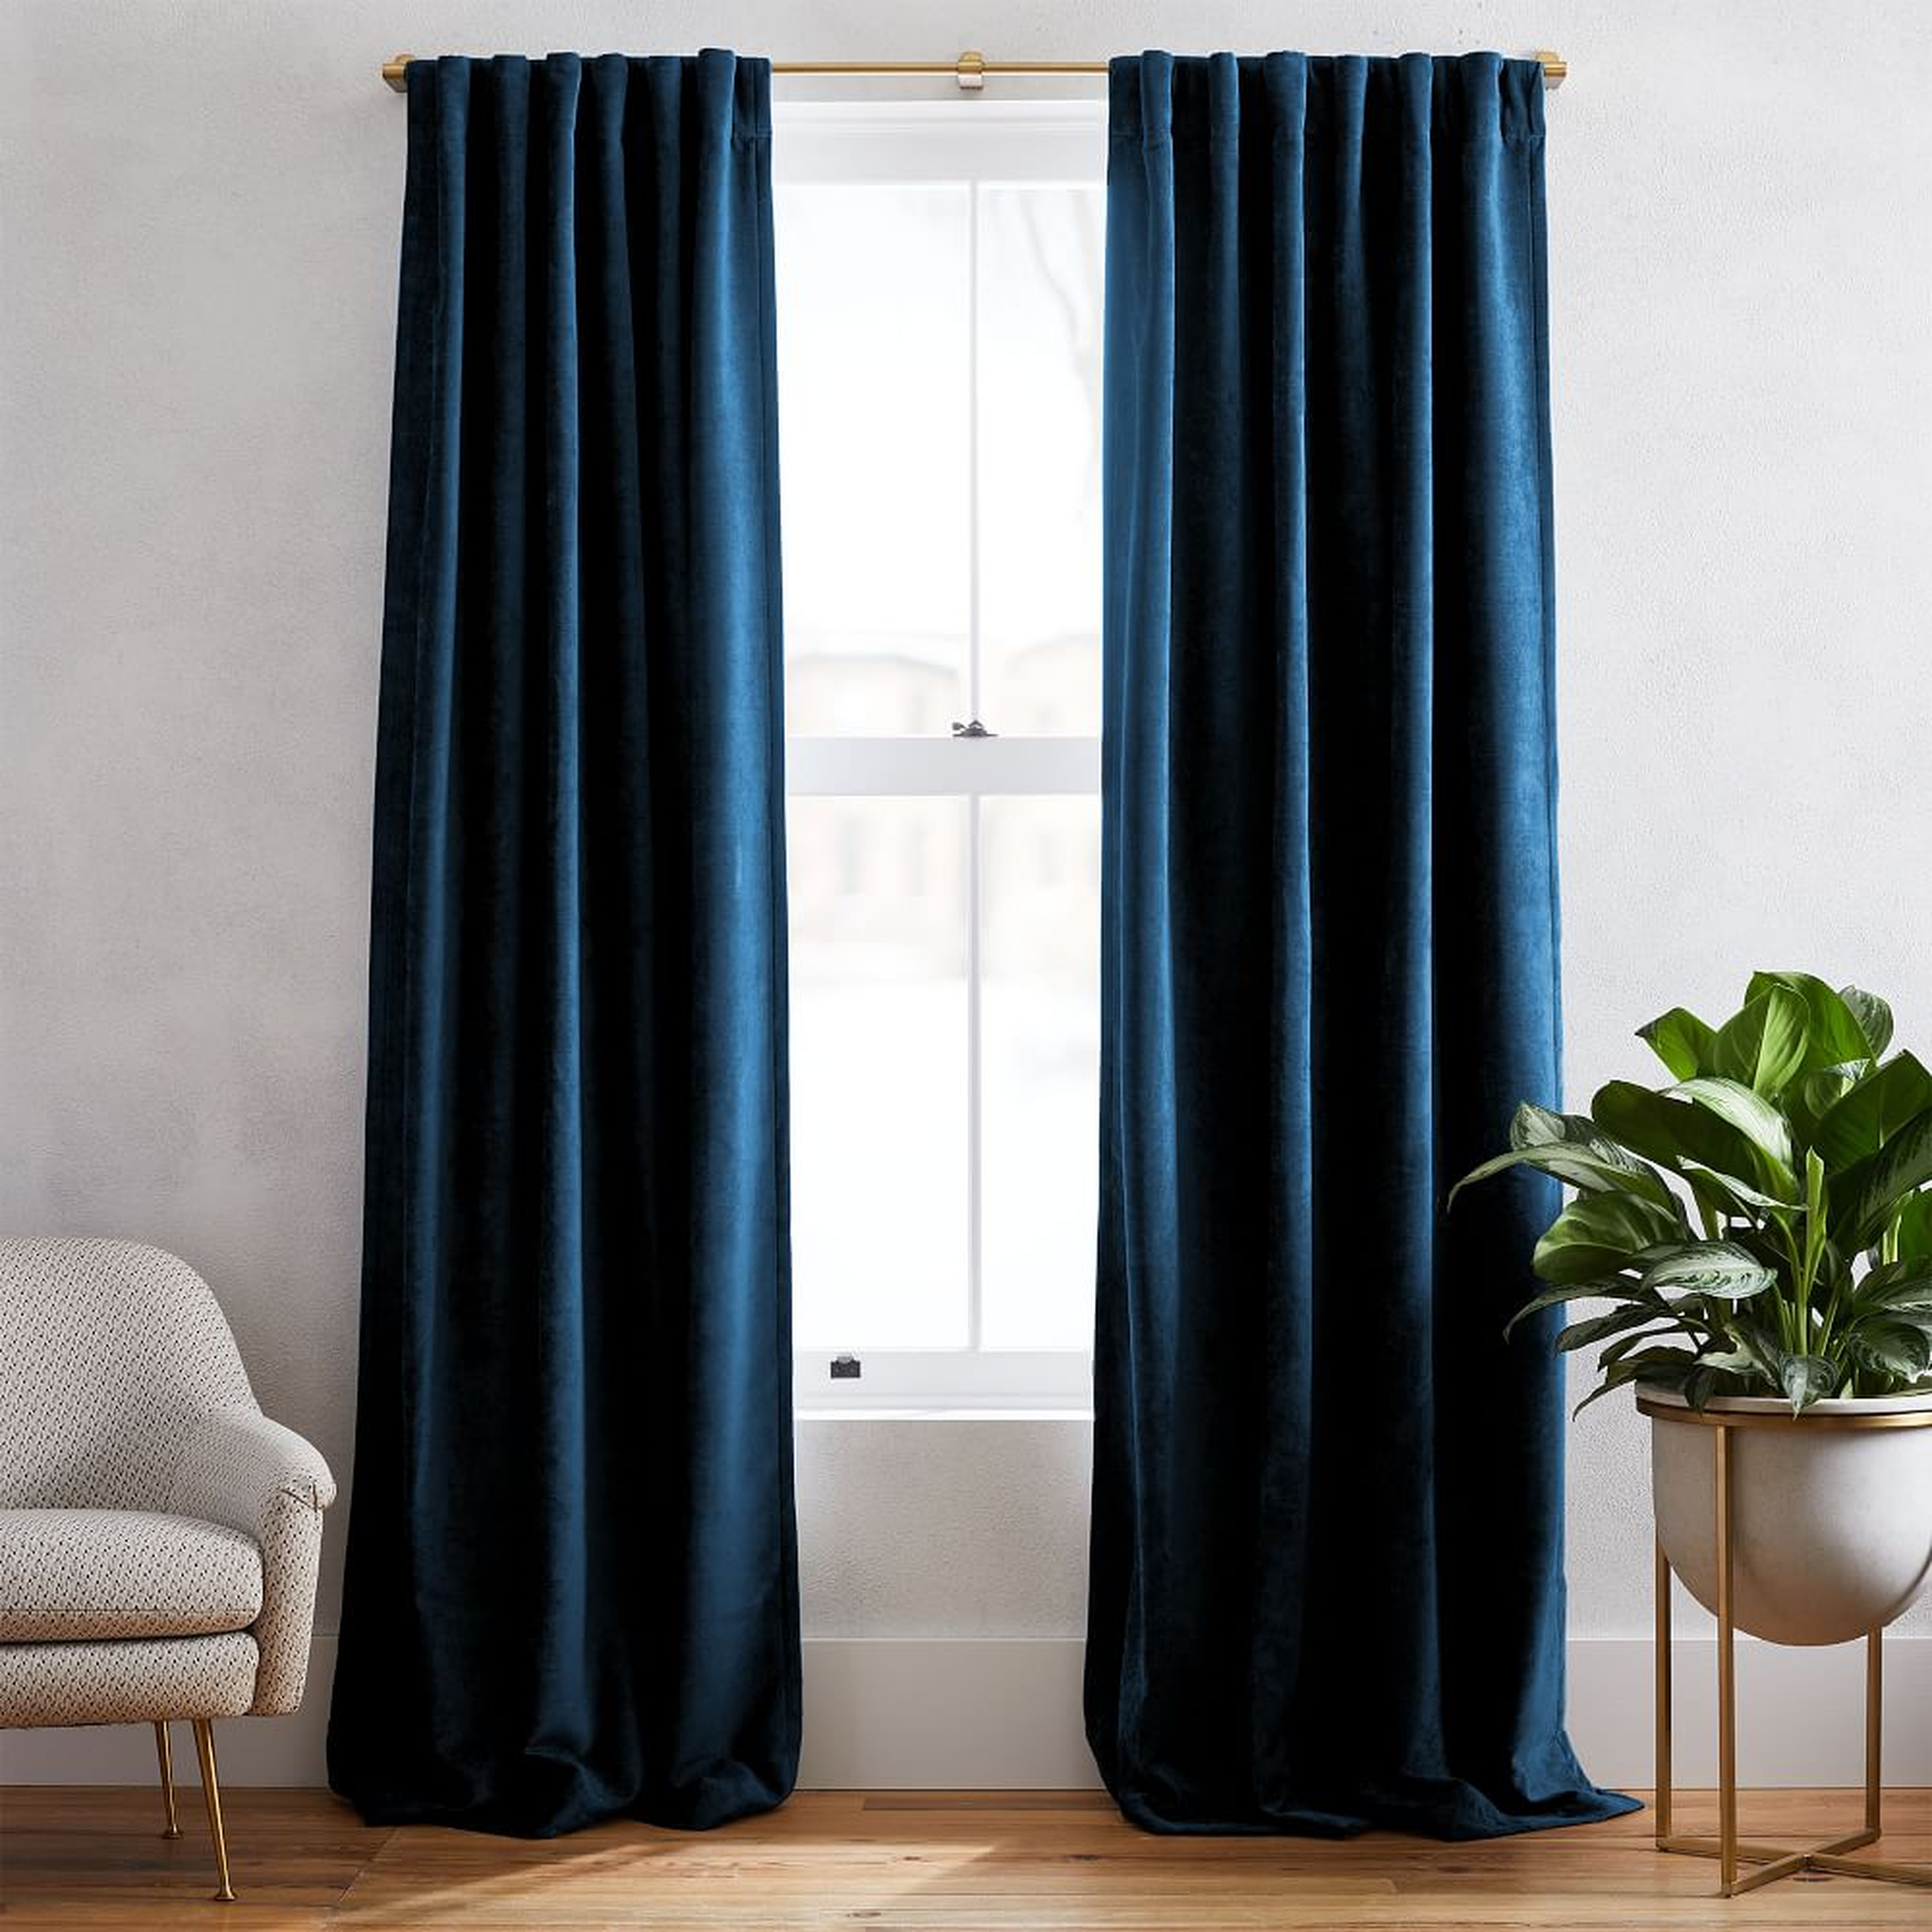 Worn Velvet Curtain with Cotton Lining Regal Blue, 48"x96", Set of 2, - West Elm